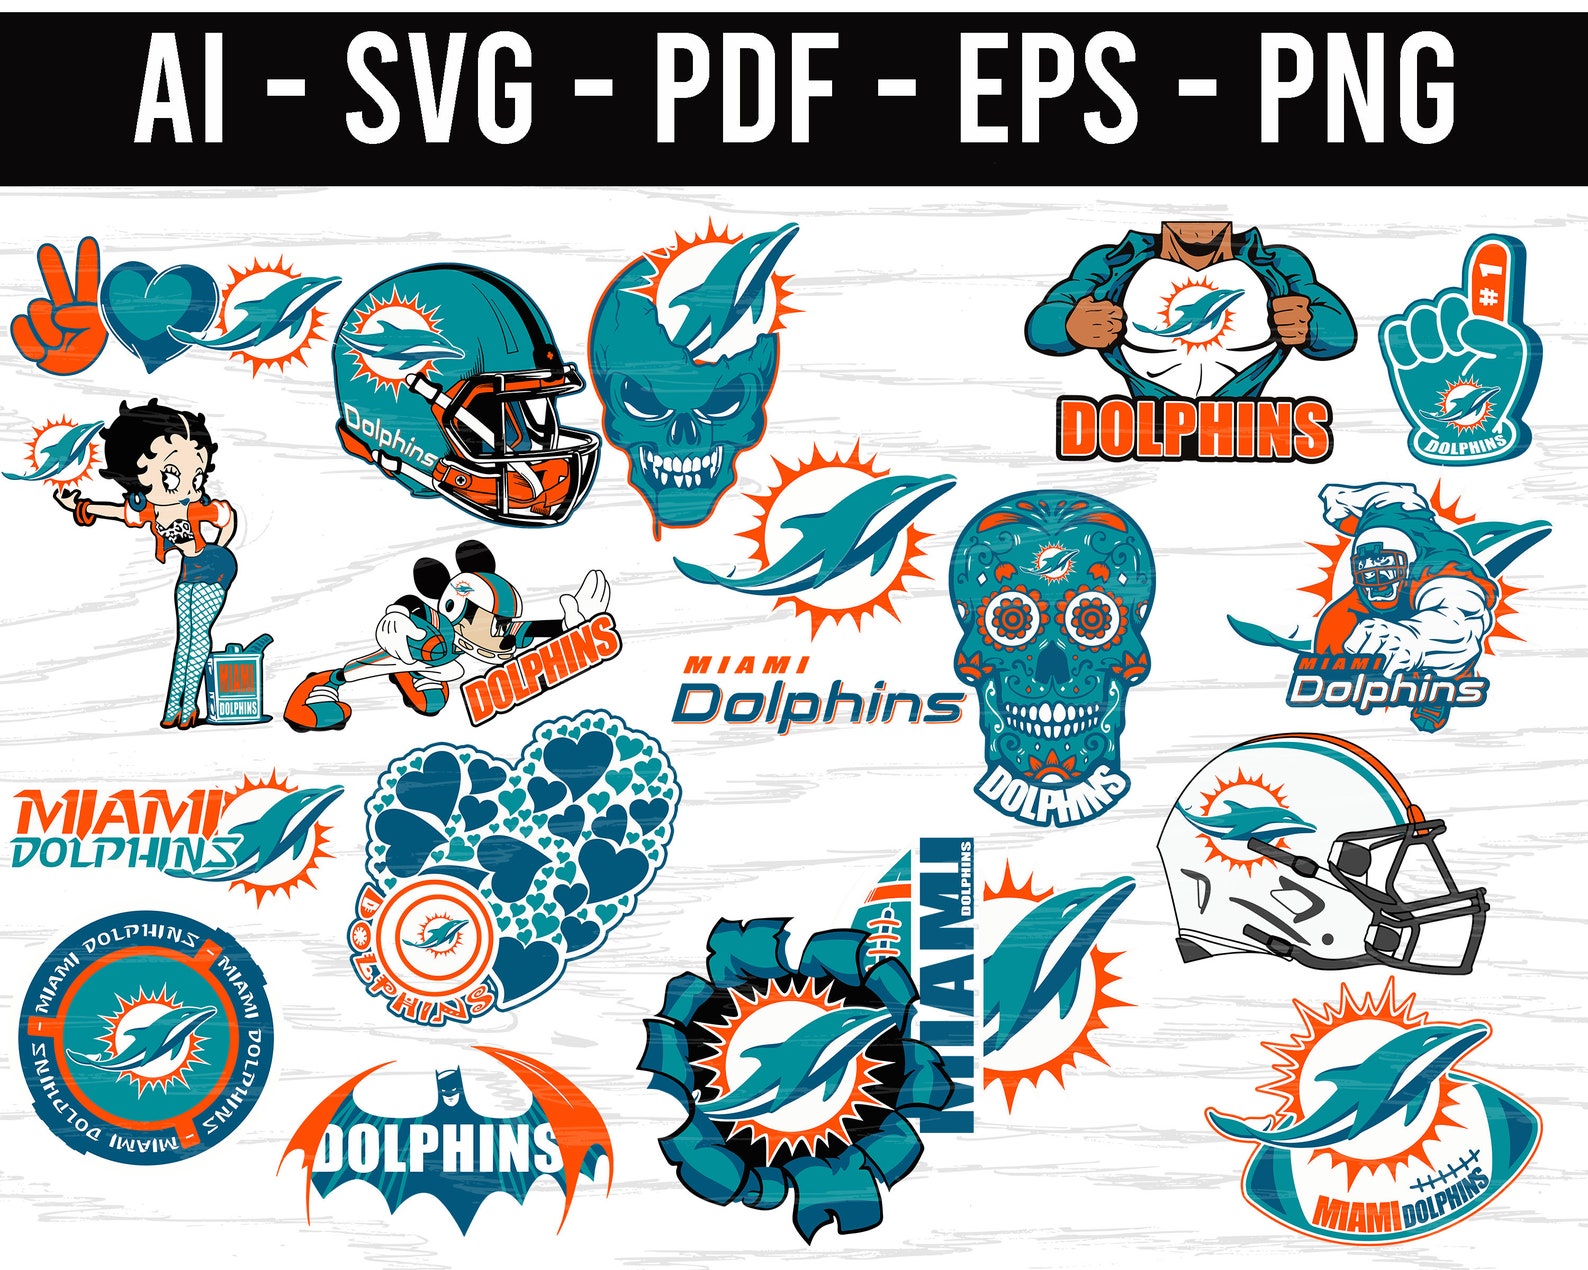 Miami Dolphins SVG png ai eps pdf NFL sports Logo Football cut | Etsy